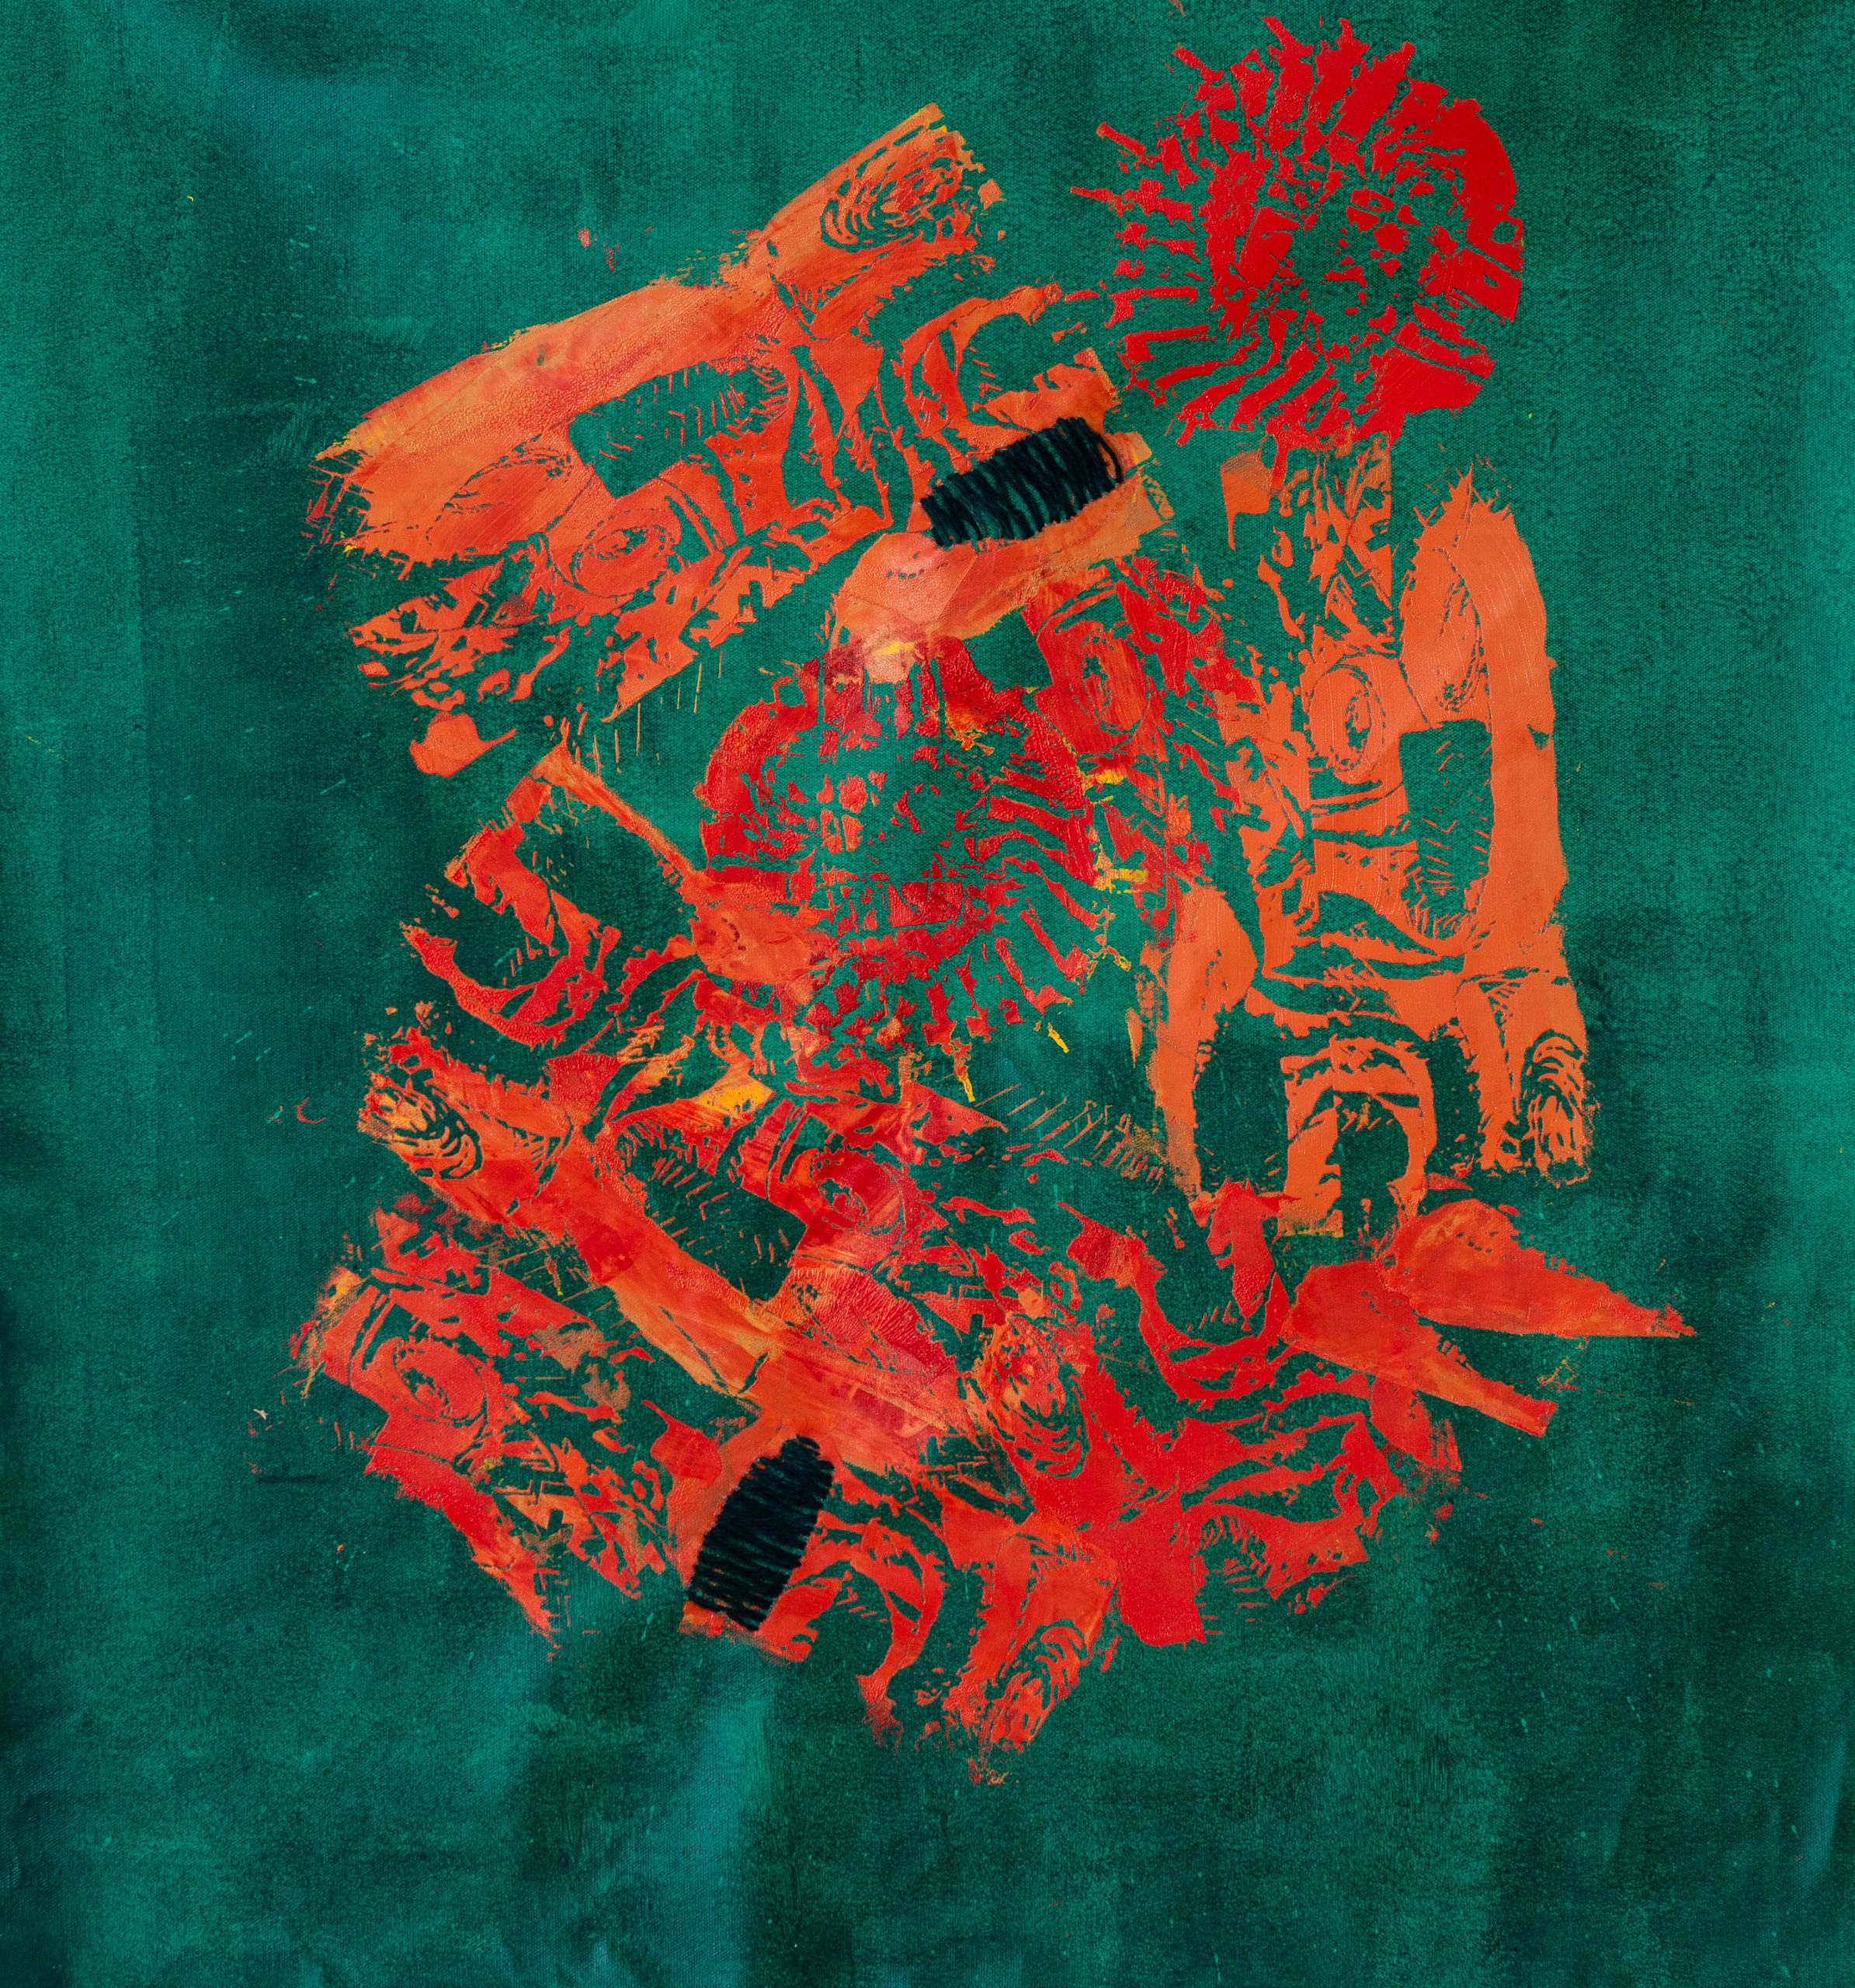 Ahoma Ntoaso), 2022, Acrylic on canvas, green jute rope, plastisol, 88.9 cm X 106.68 cm.